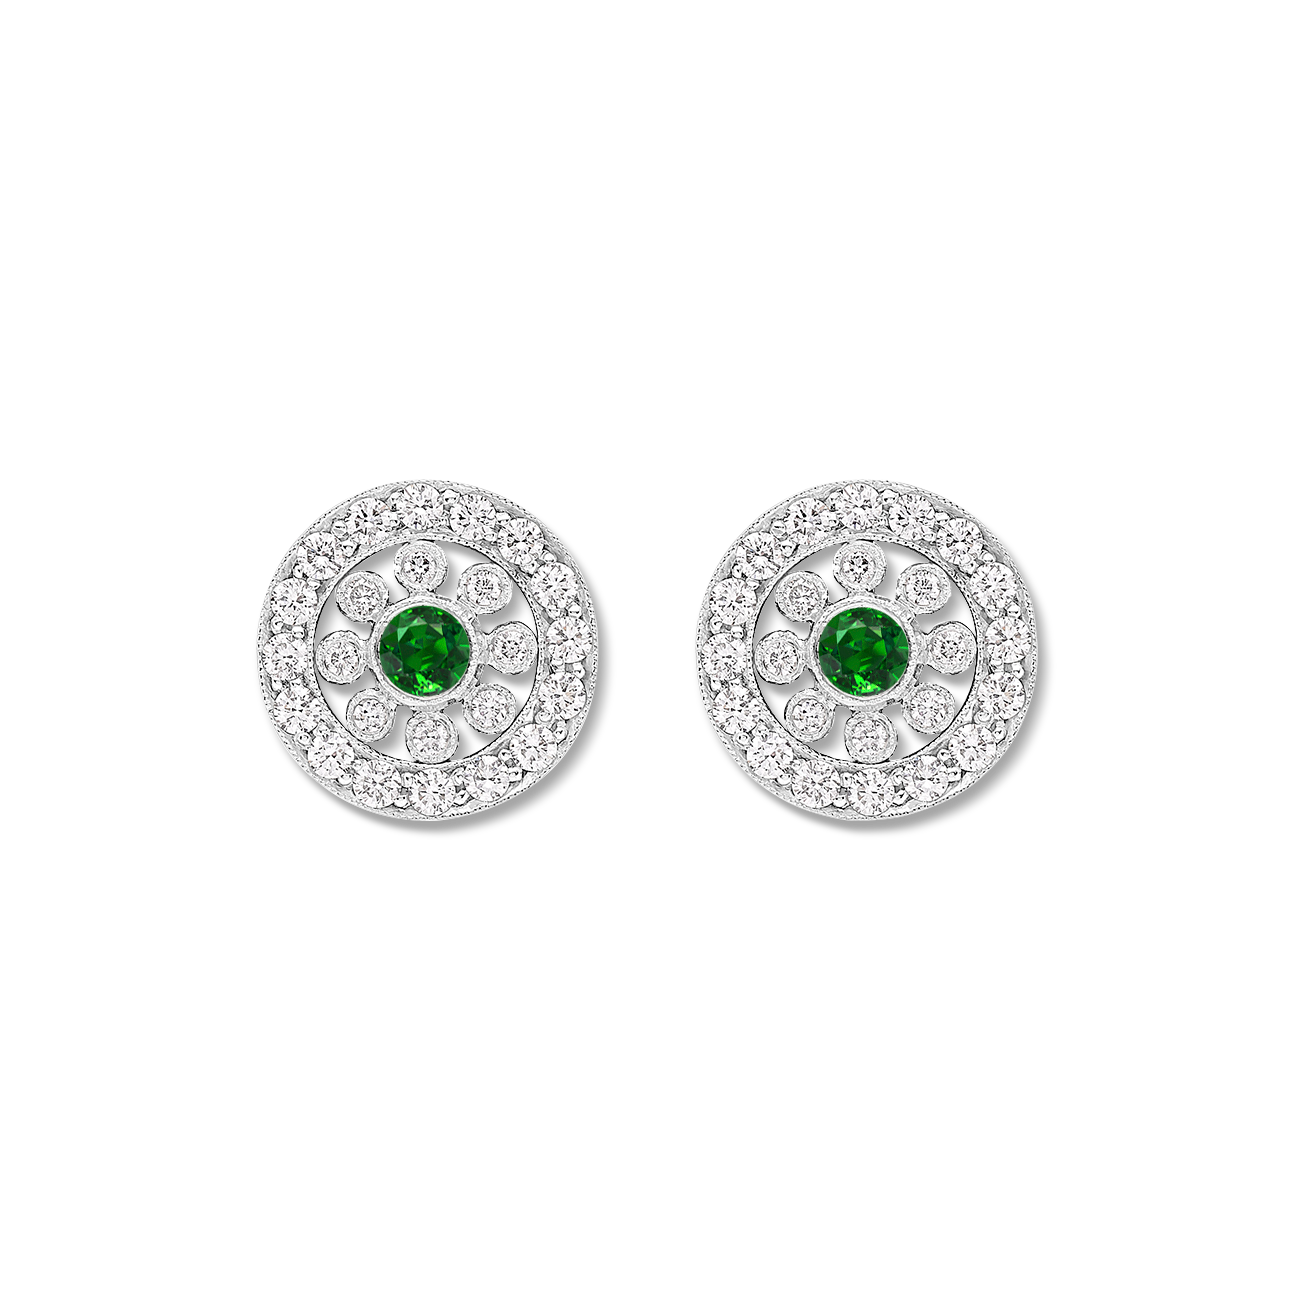 Emerald and diamond satellite earring